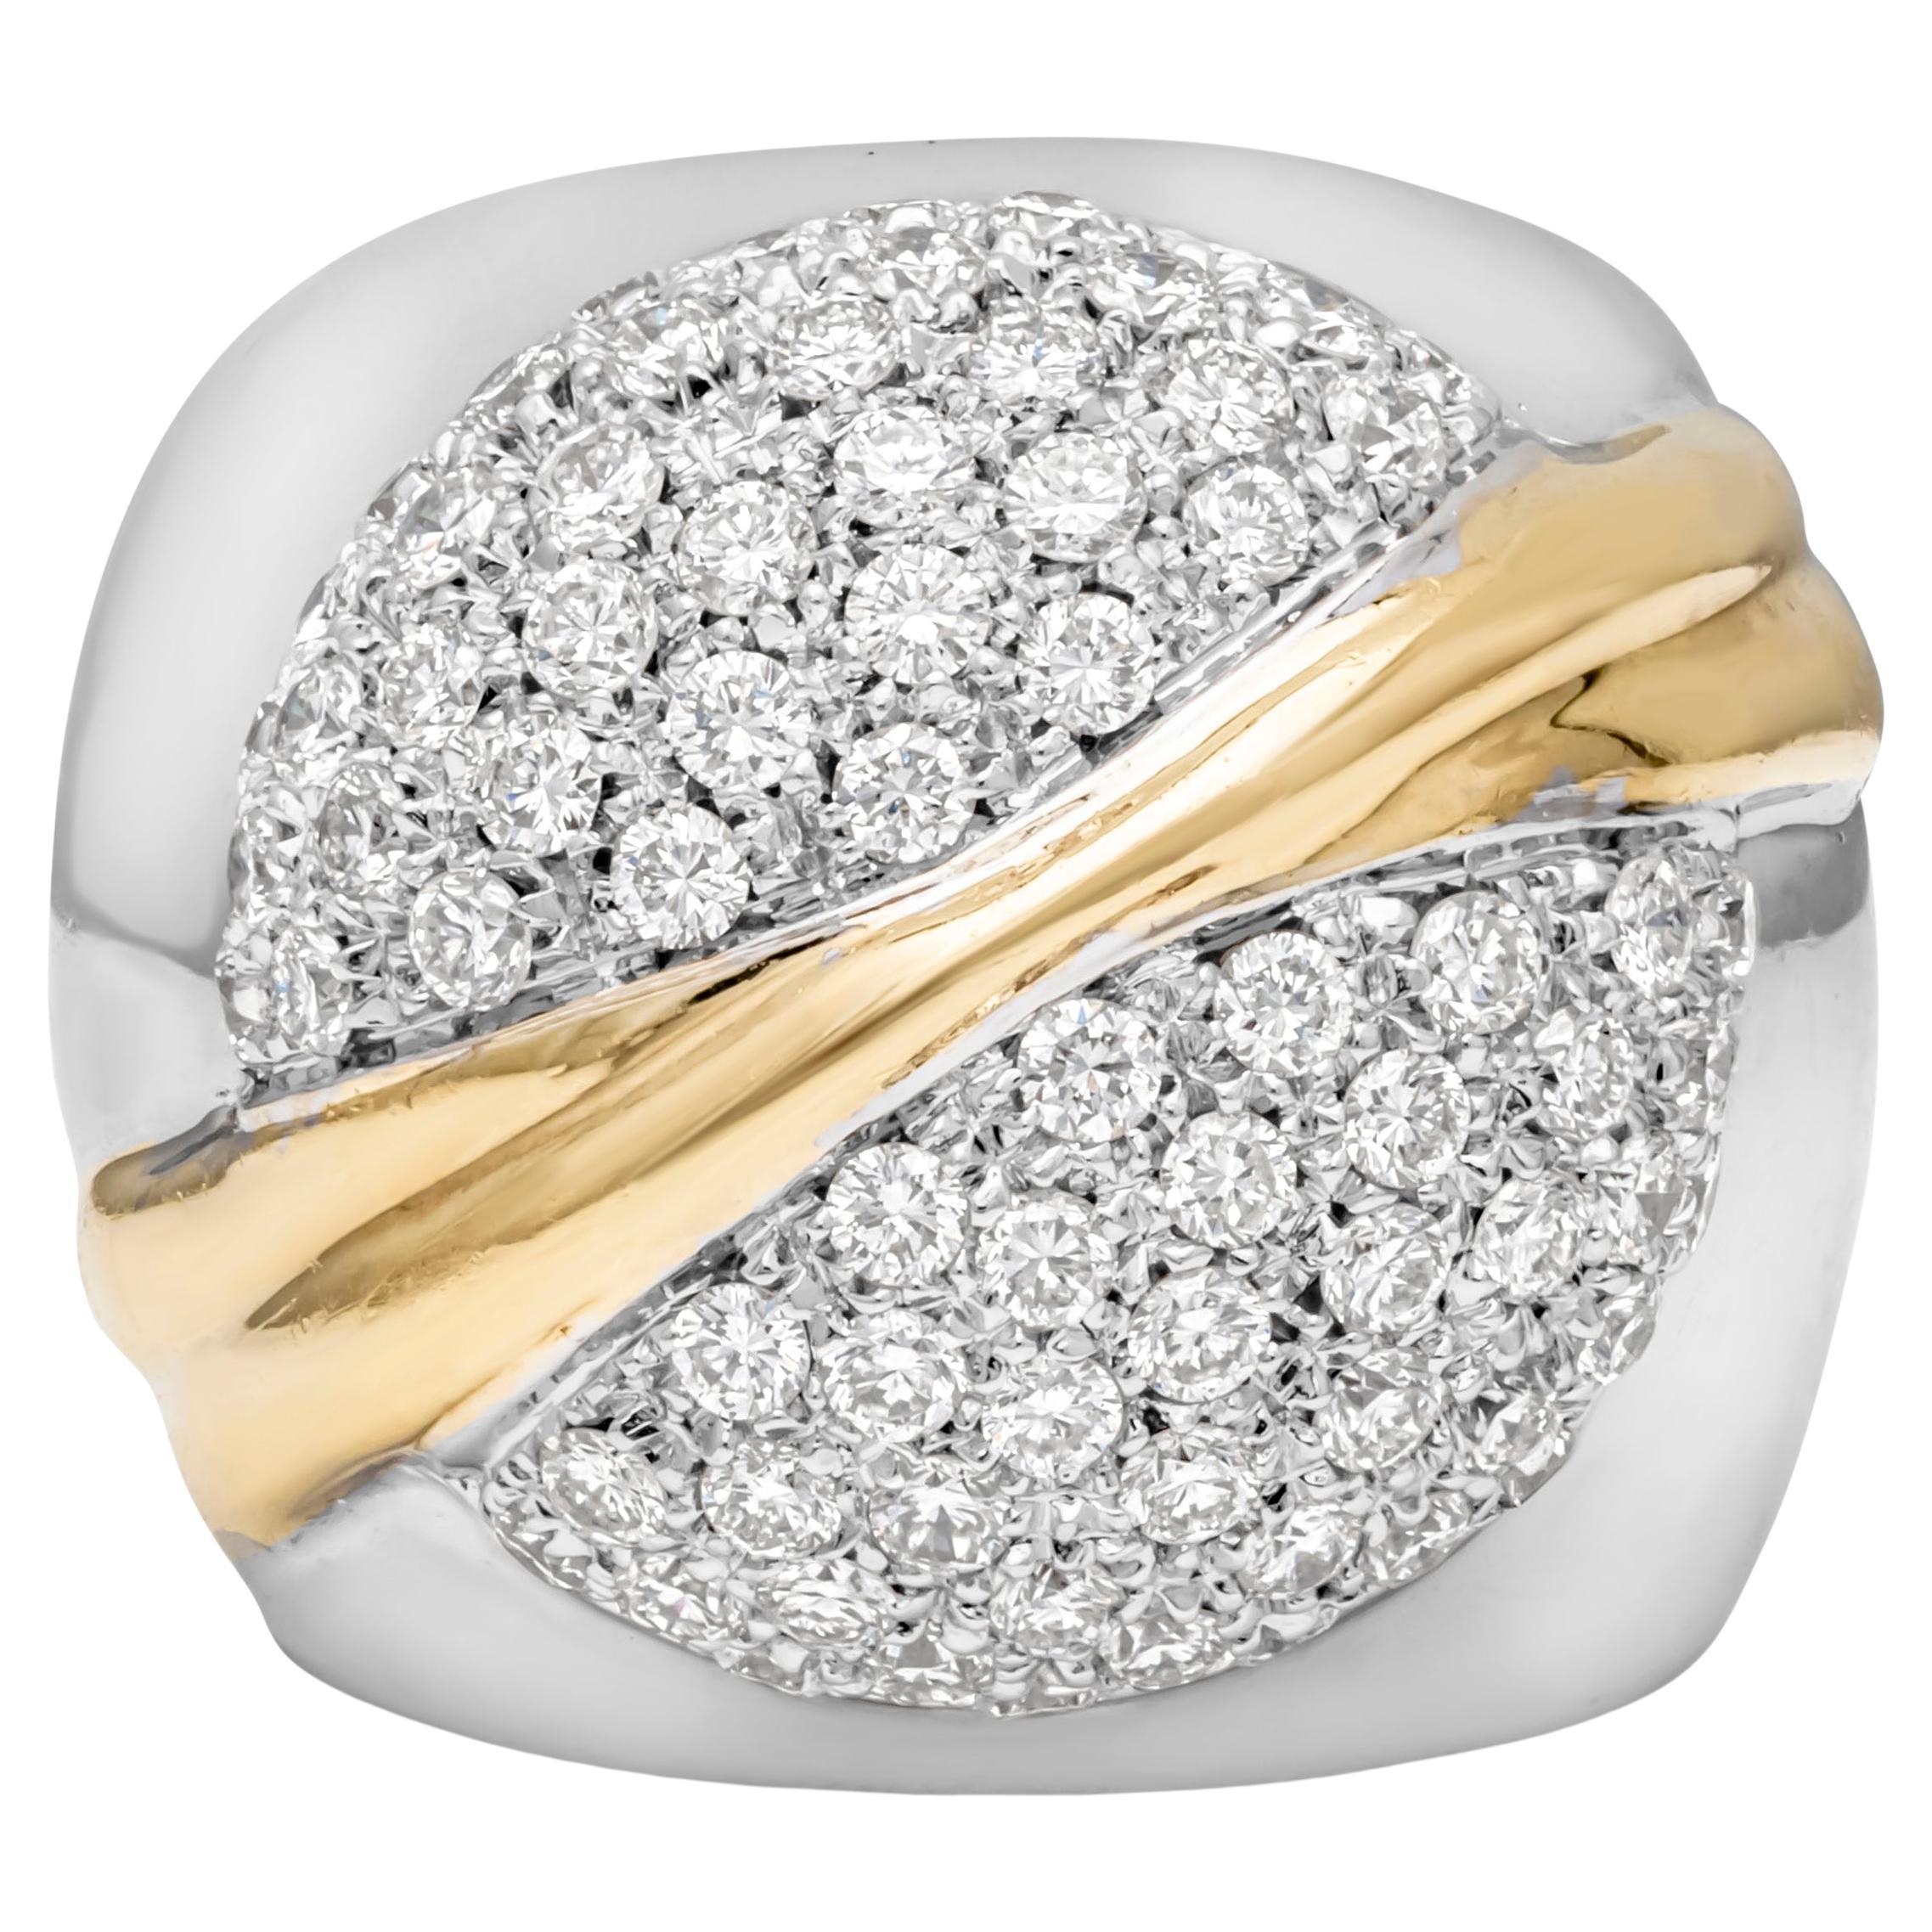 Roman Malakov 3.06 Carats Total Round Brilliant Cut Diamond Wide Fashion Ring For Sale